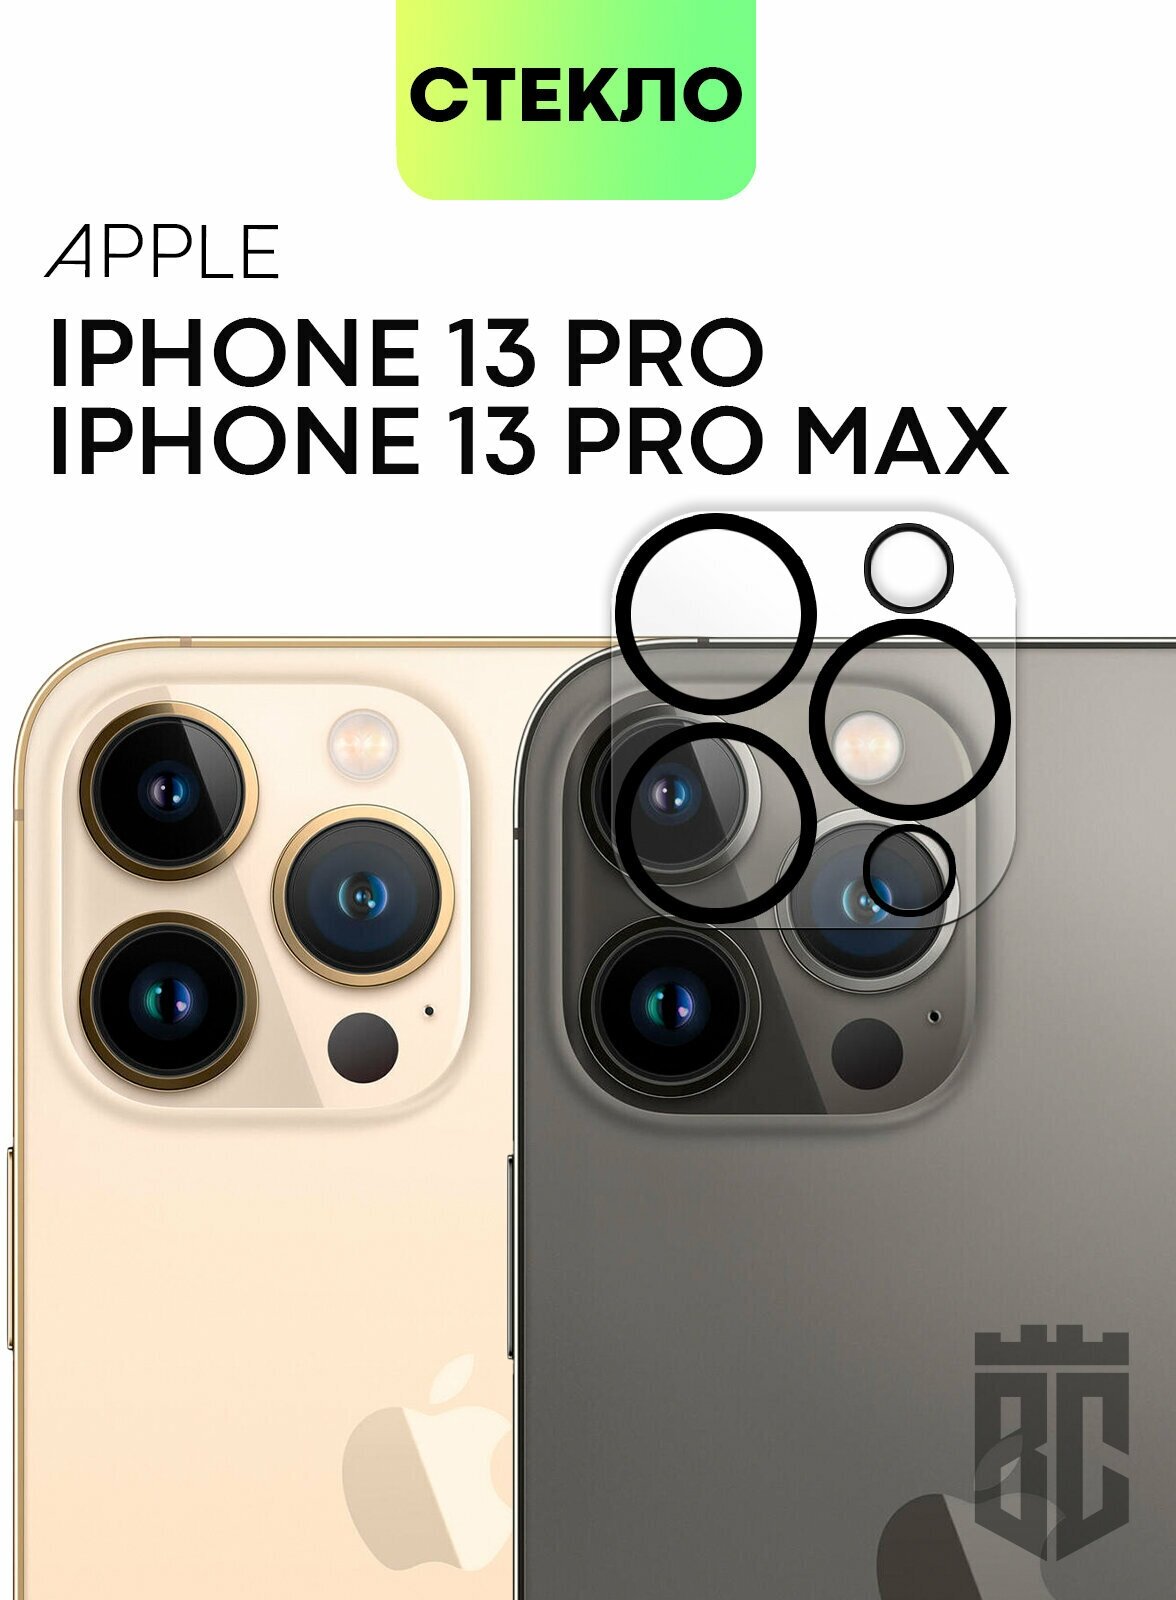 Защитное стекло на камеру телефона Apple iPhone 13 Pro и iPhone 13 Pro Max (Эпл Айфон 13 Про 13 Про Макс) стекло BROSCORP для защиты камер прозрачное